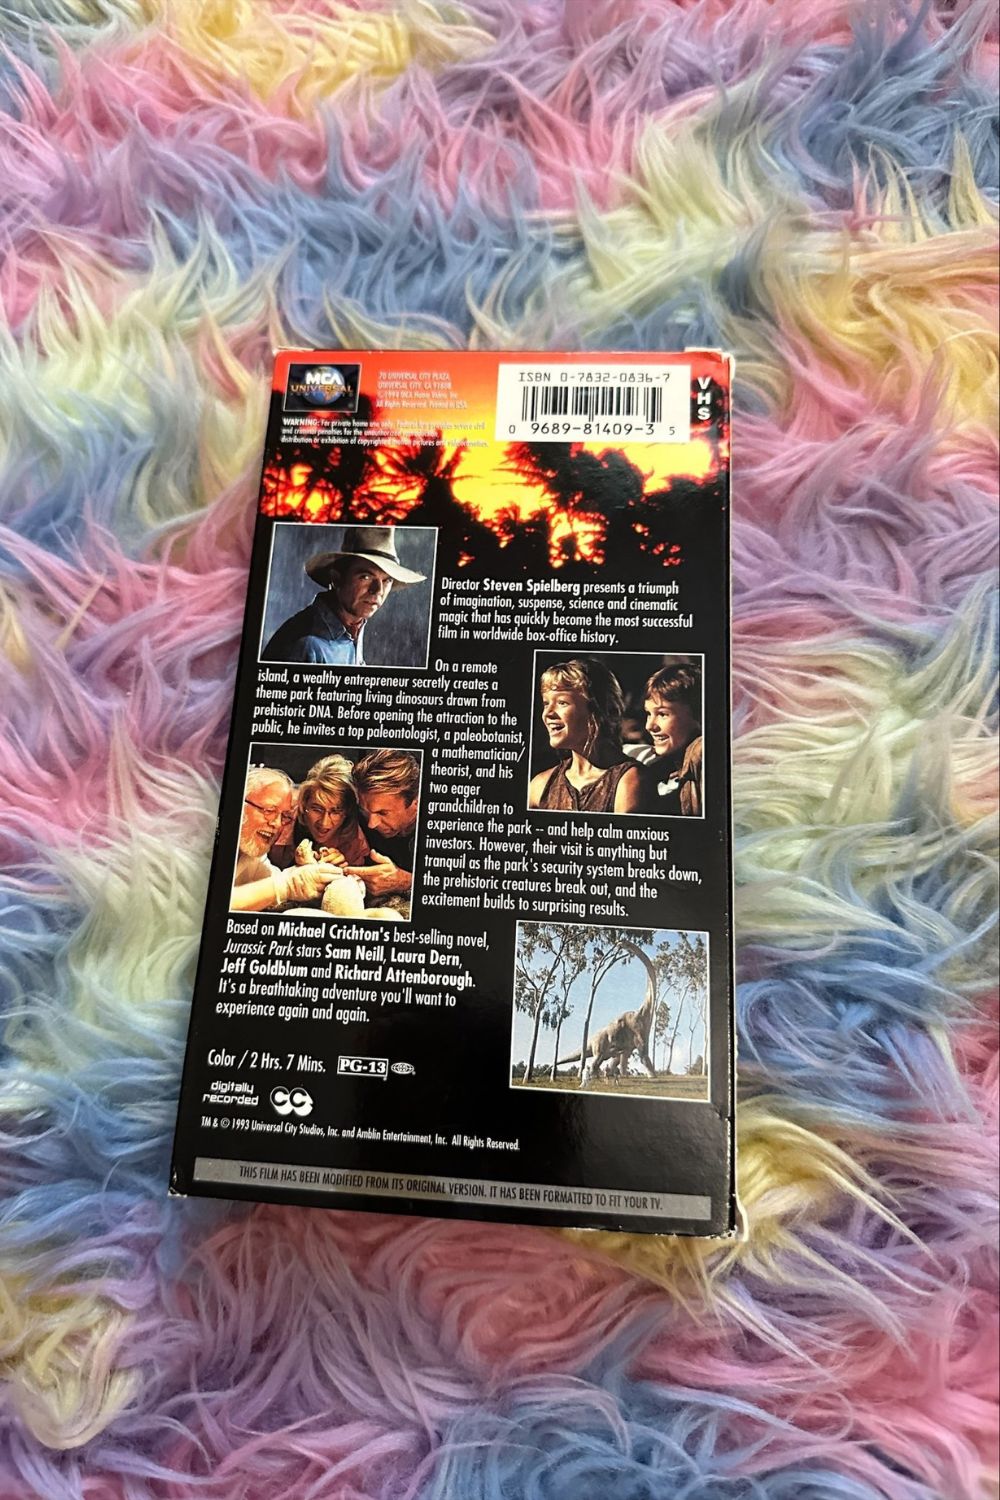 JURASSIC PARK VHS*